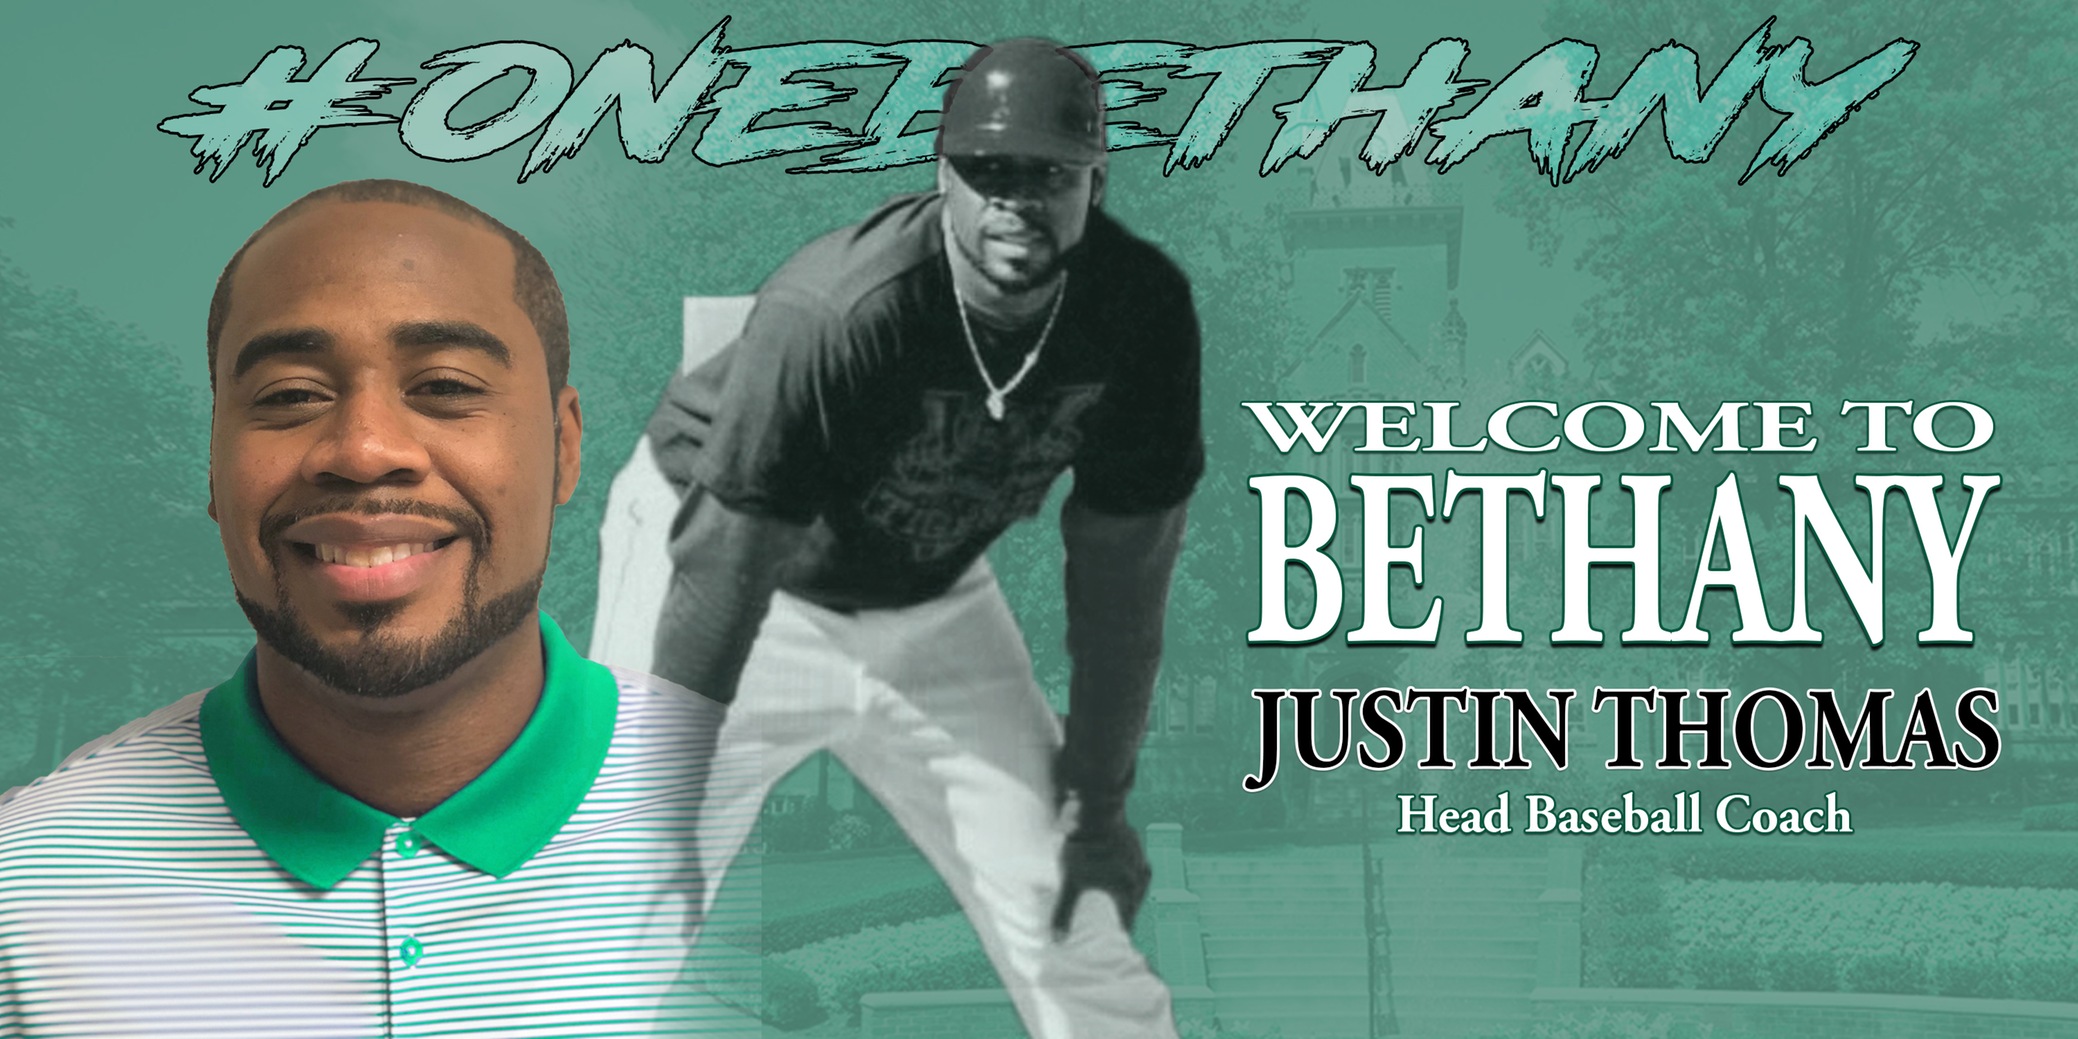 Justin Thomas, Next Head Baseball Coach at Bethany College